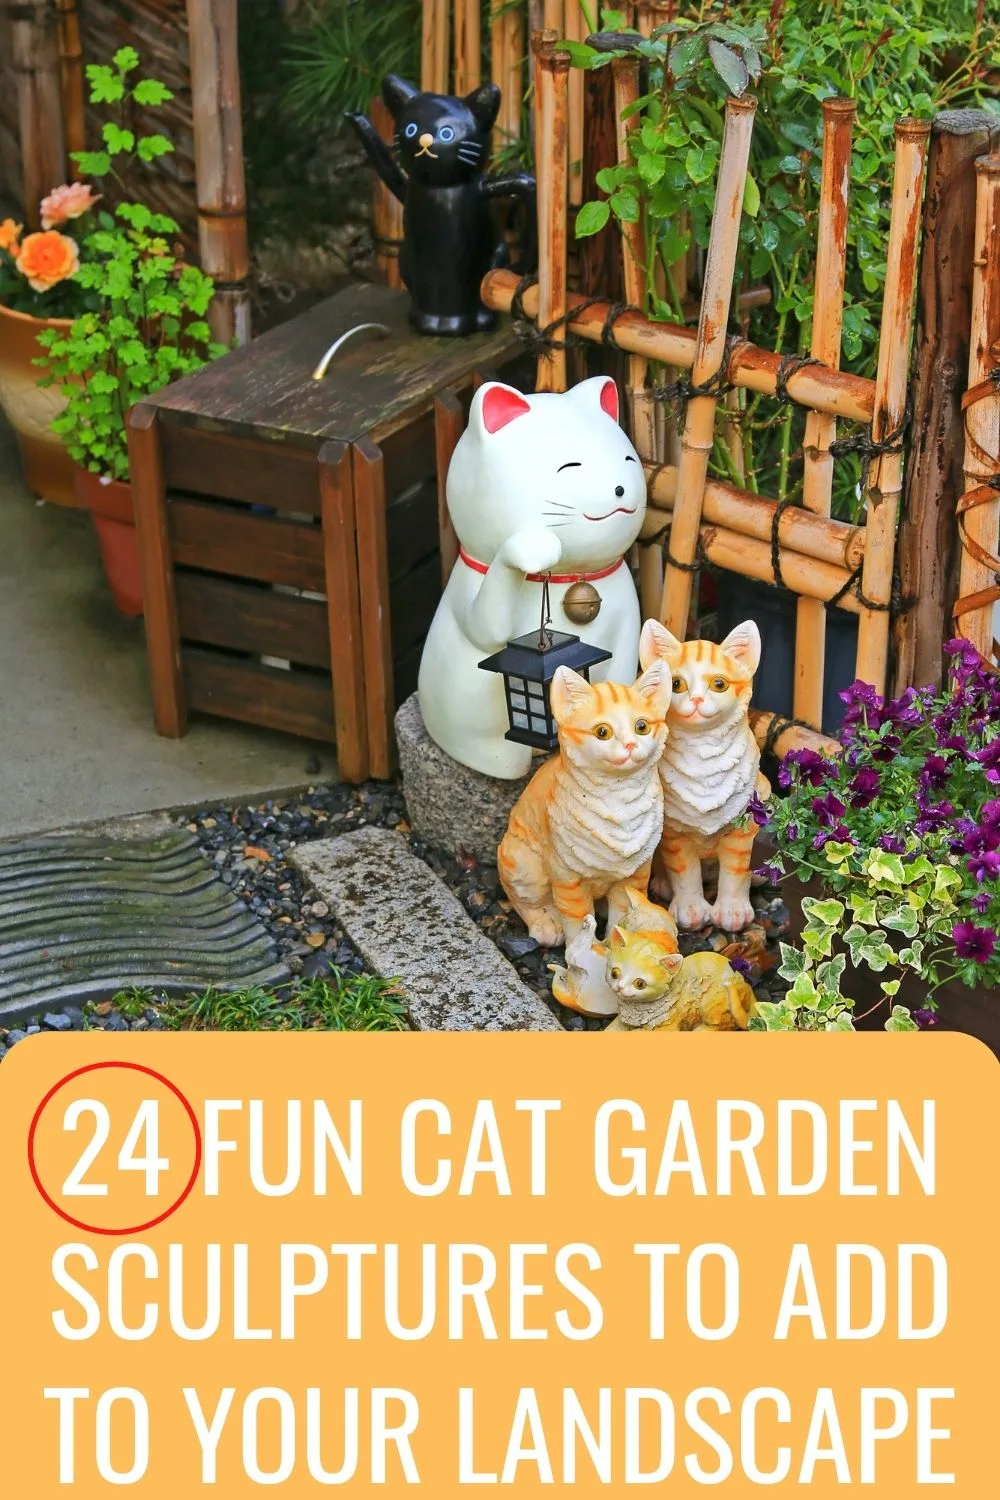 24 fun cat garden sculptures to add to your landscape